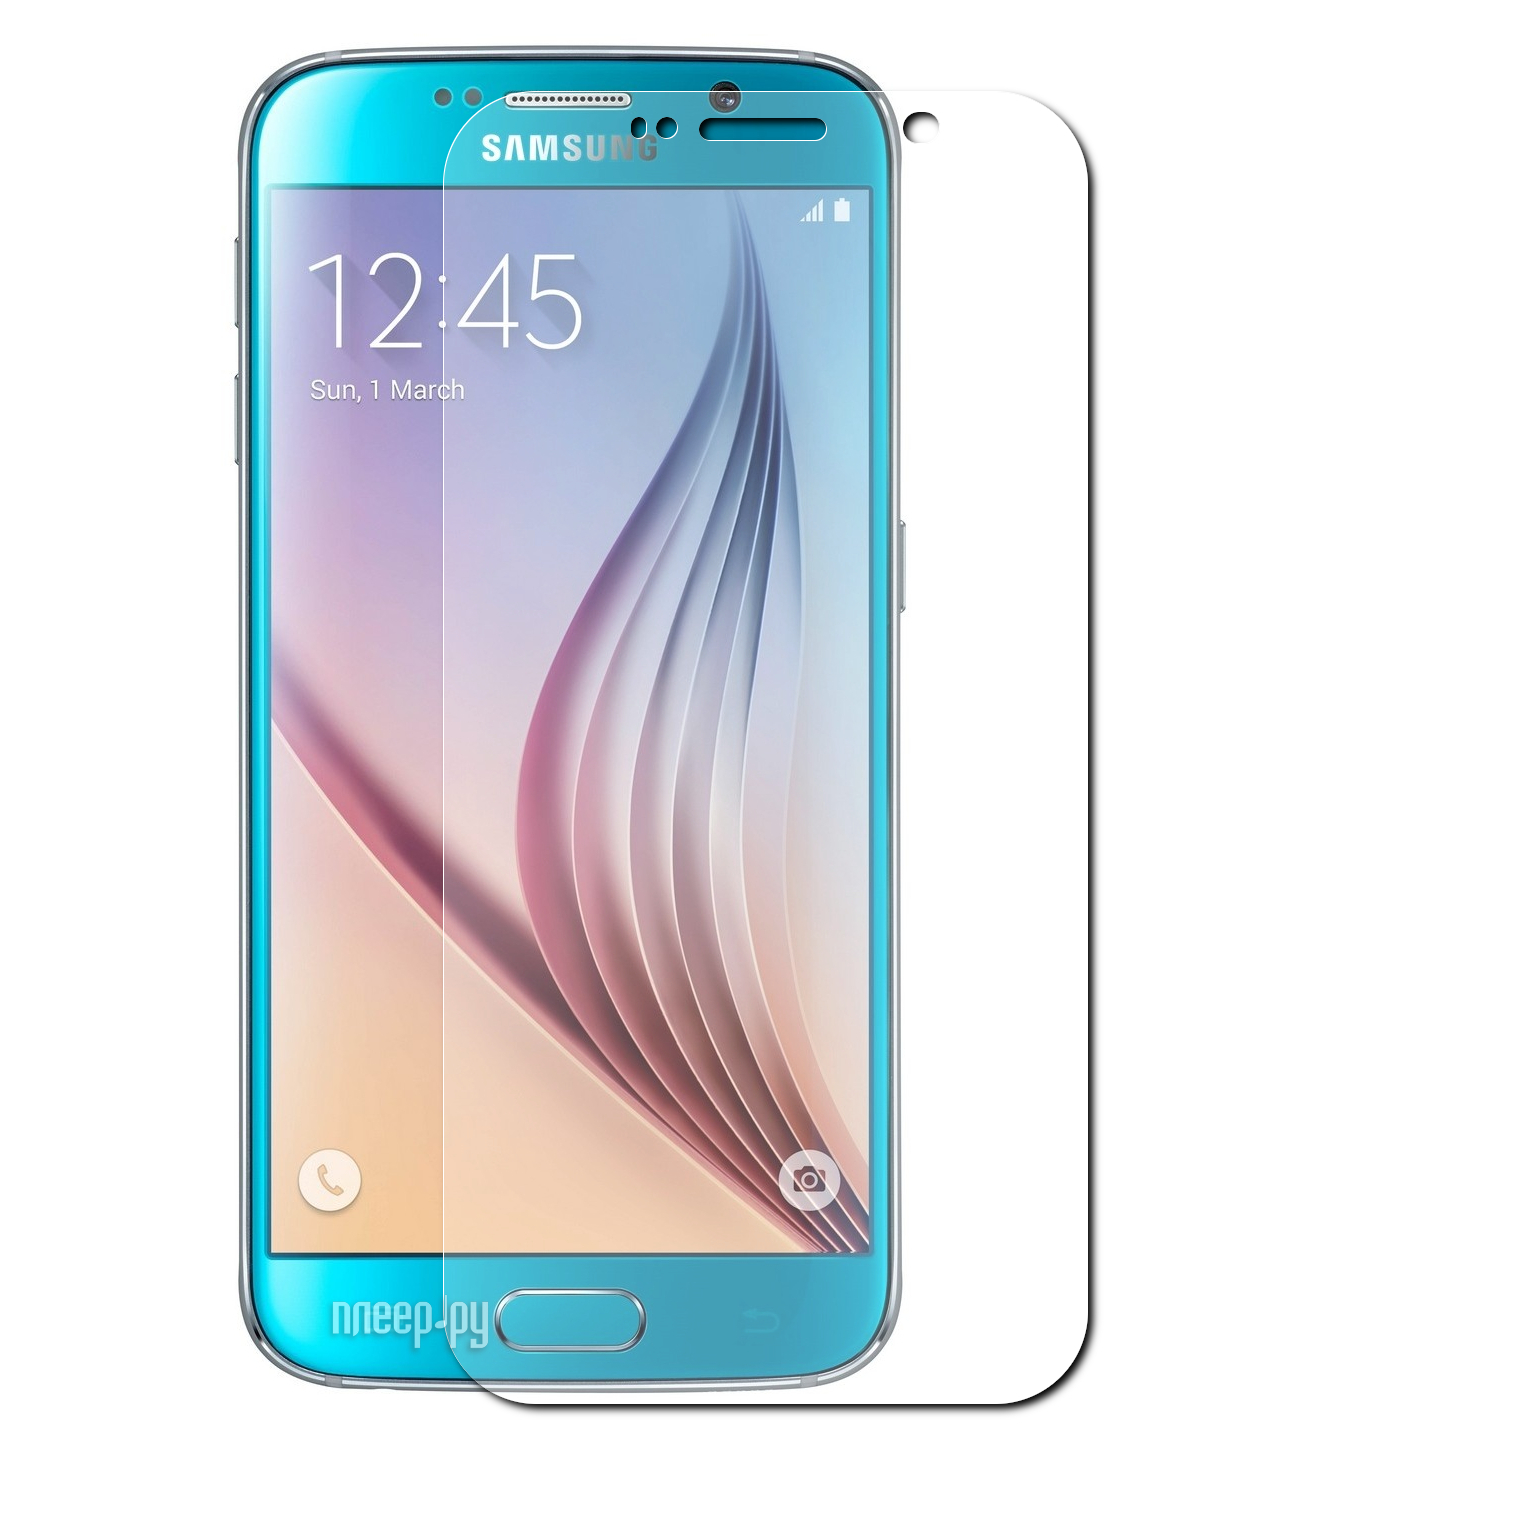    Samsung G920F Galaxy S6 Onext  40869  279 